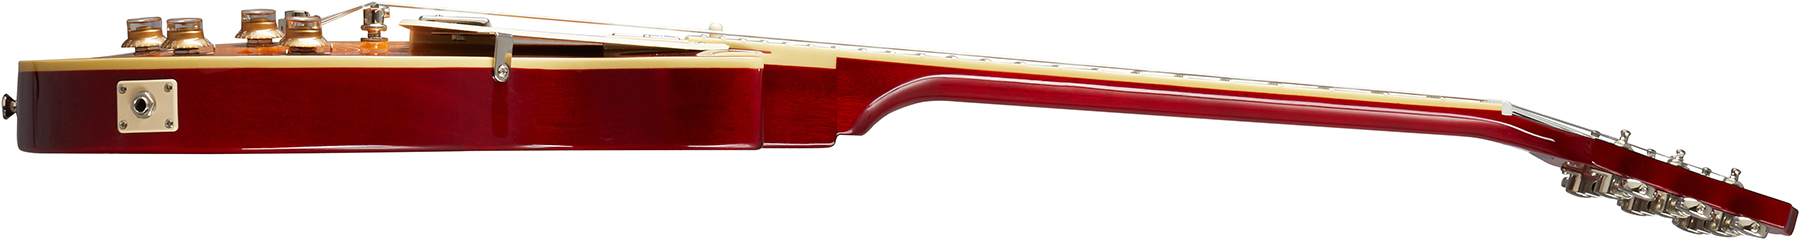 Epiphone Les Paul Standard 60s 2h Ht Rw - Iced Tea - Single cut electric guitar - Variation 2